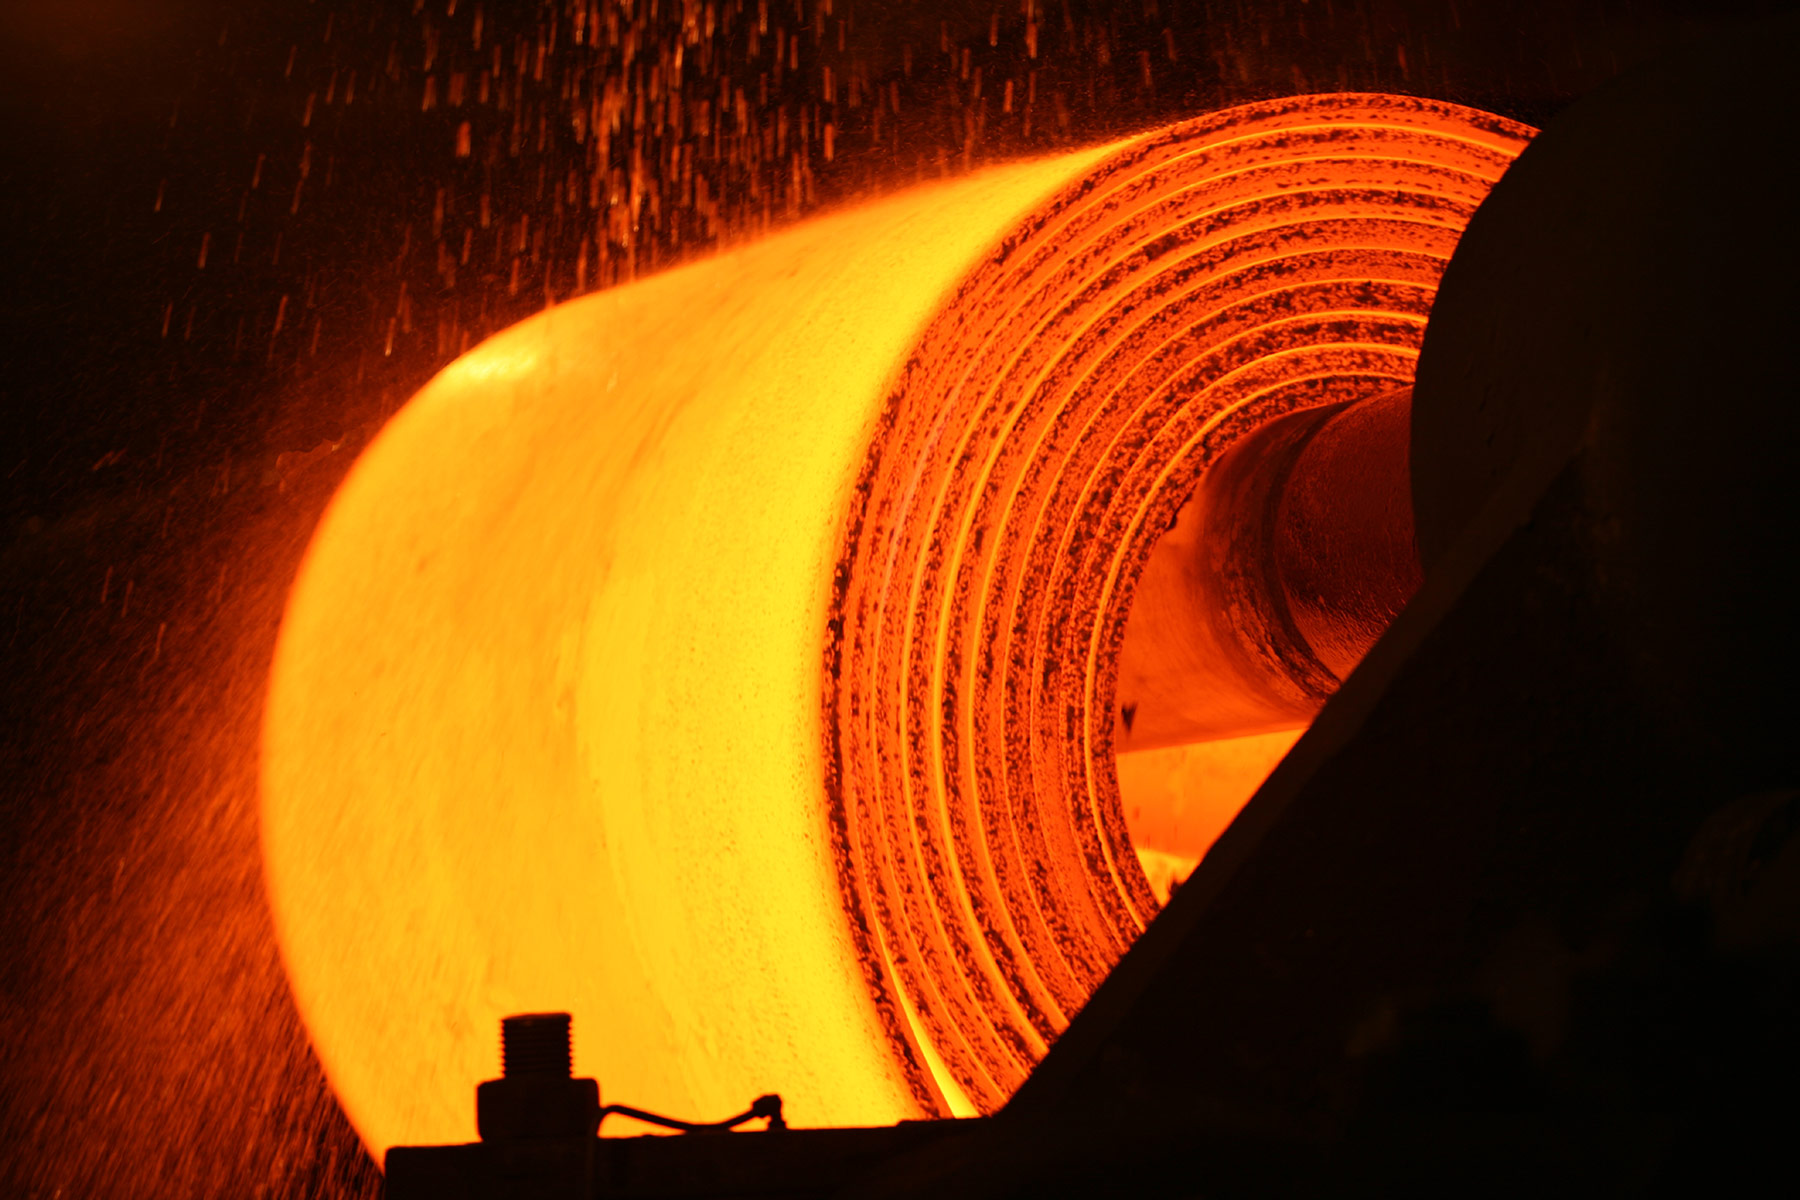 UK Location photographers - Corus / Tata Steel Europe Rolling Hot Mill / Push4